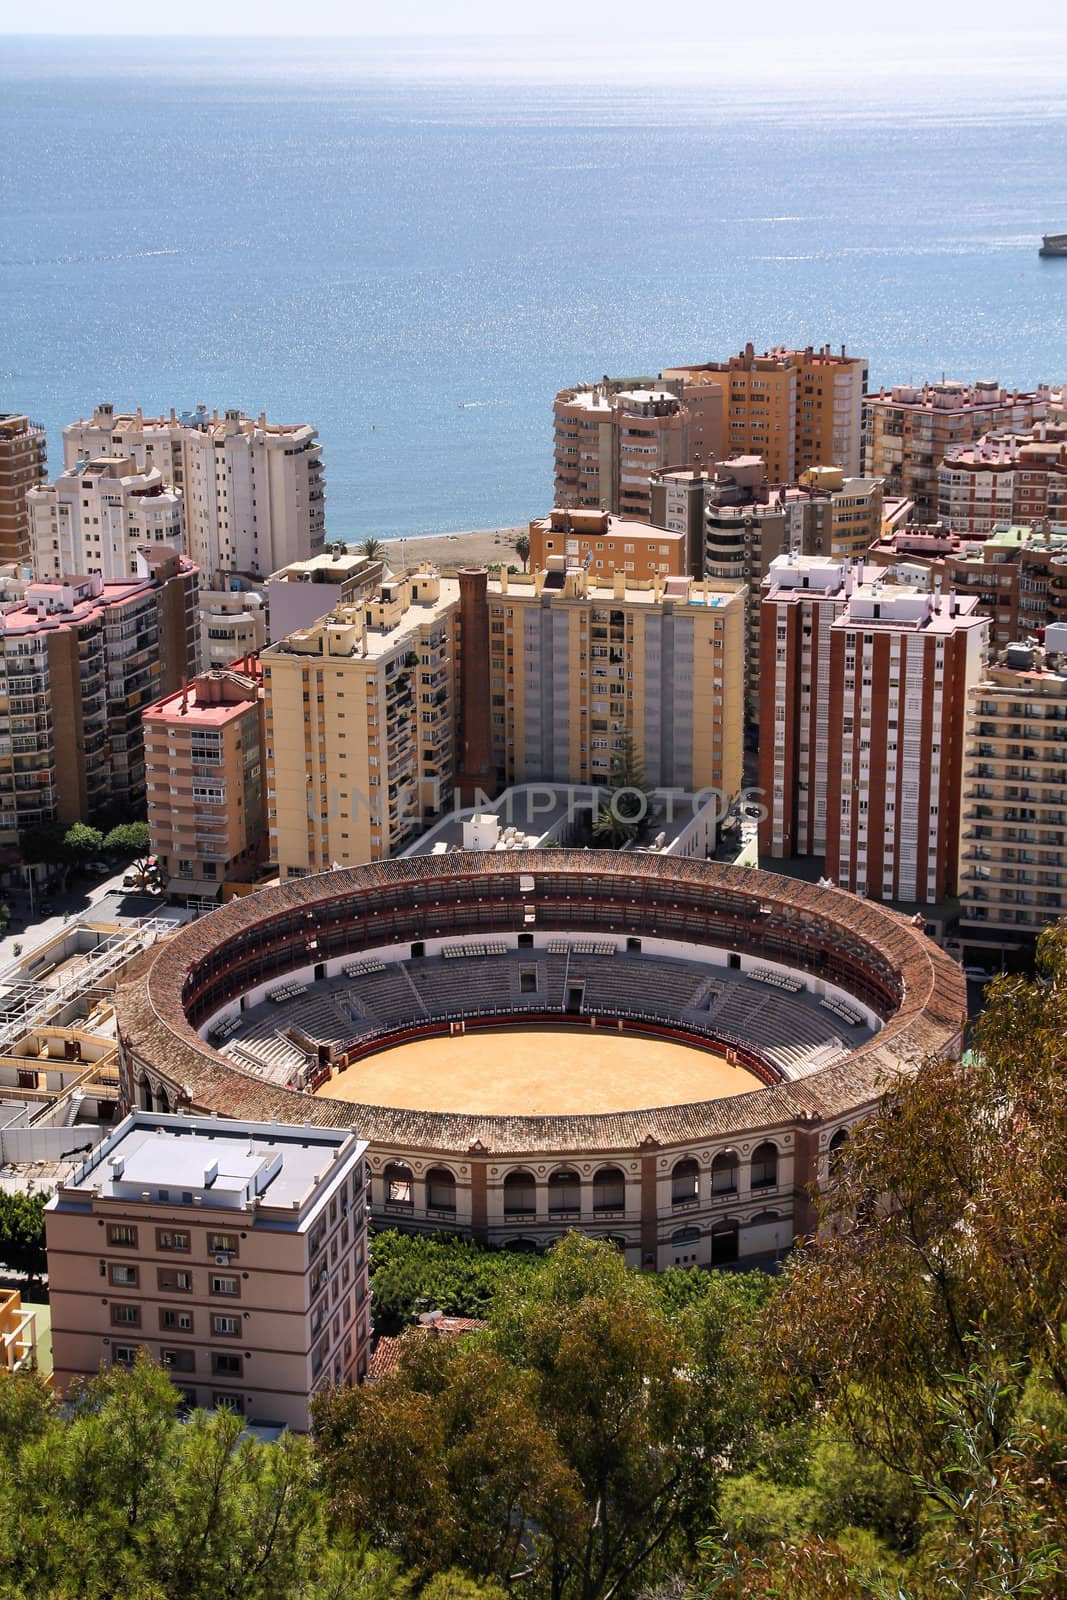 Malaga in Andalusia region of Spain. Famous bull ring stadium.